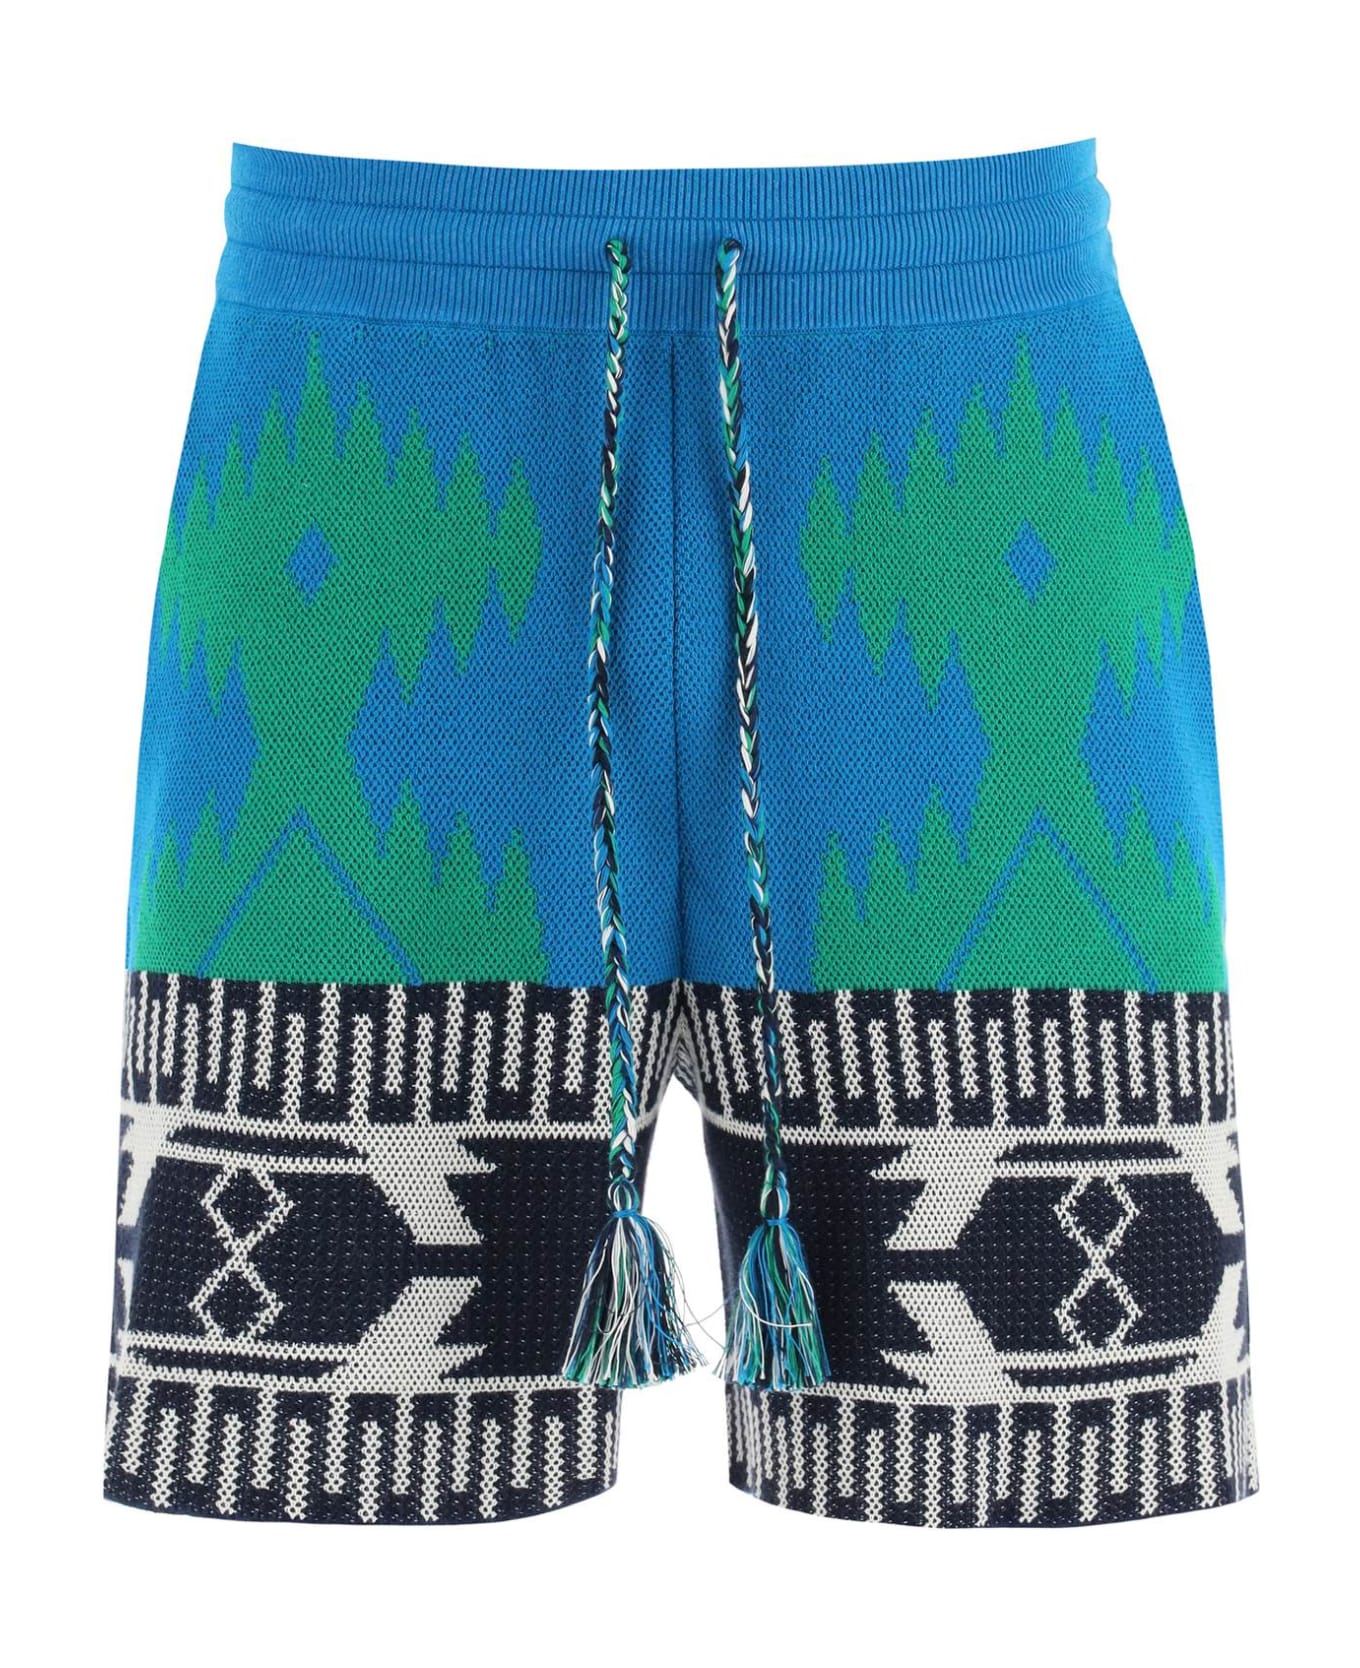 Alanui Jacquard Cotton Icon Shorts - BLUE FOREST GREEN (Light blue) ショートパンツ